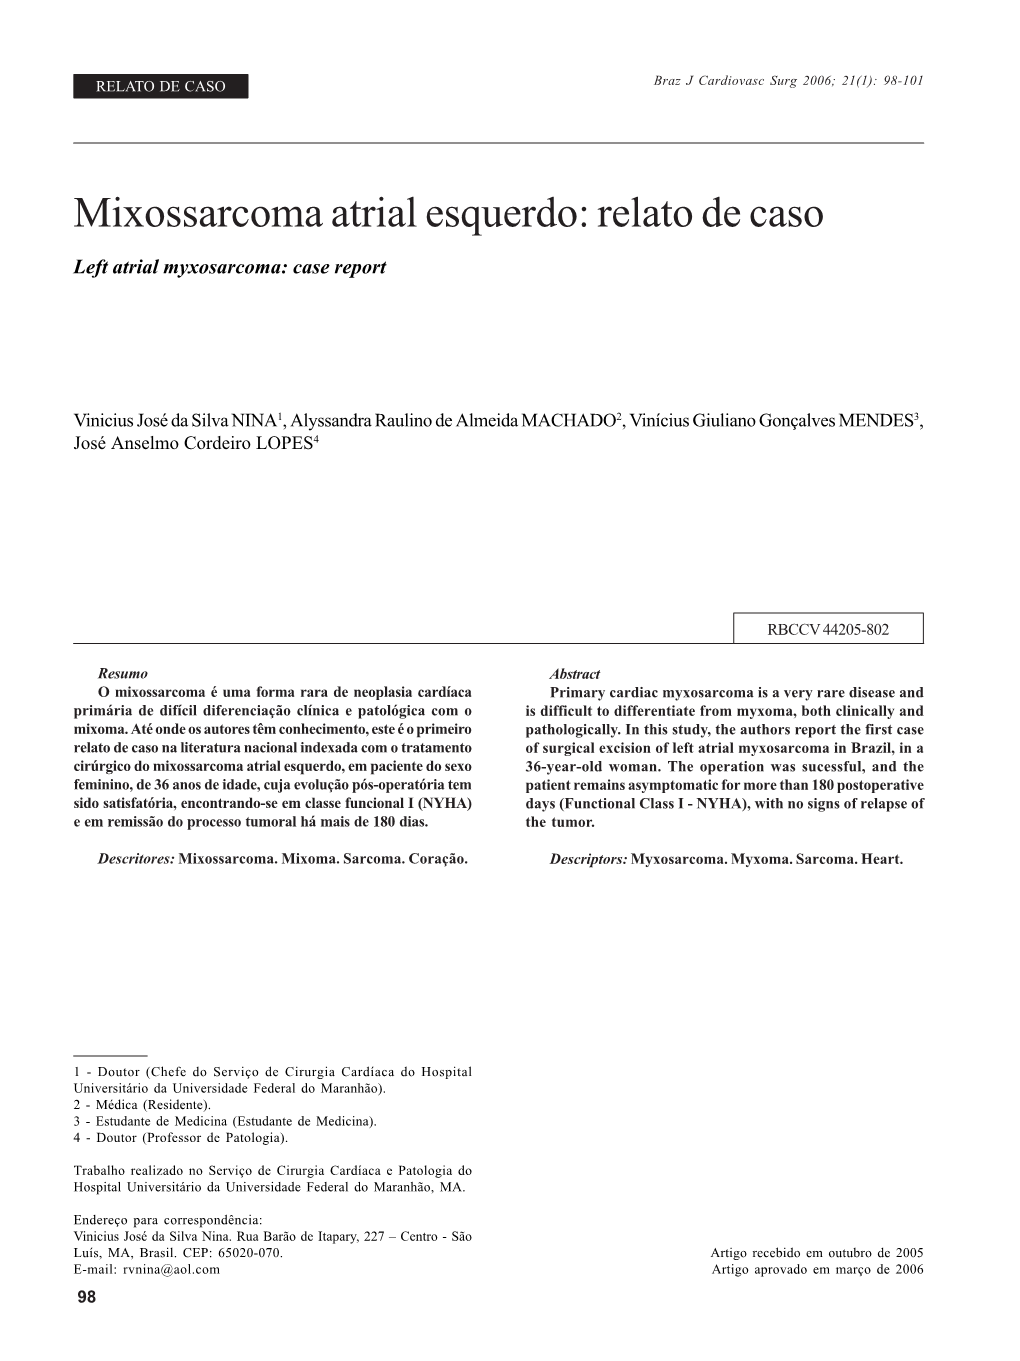 Left Atrial Myxosarcoma: Case Report